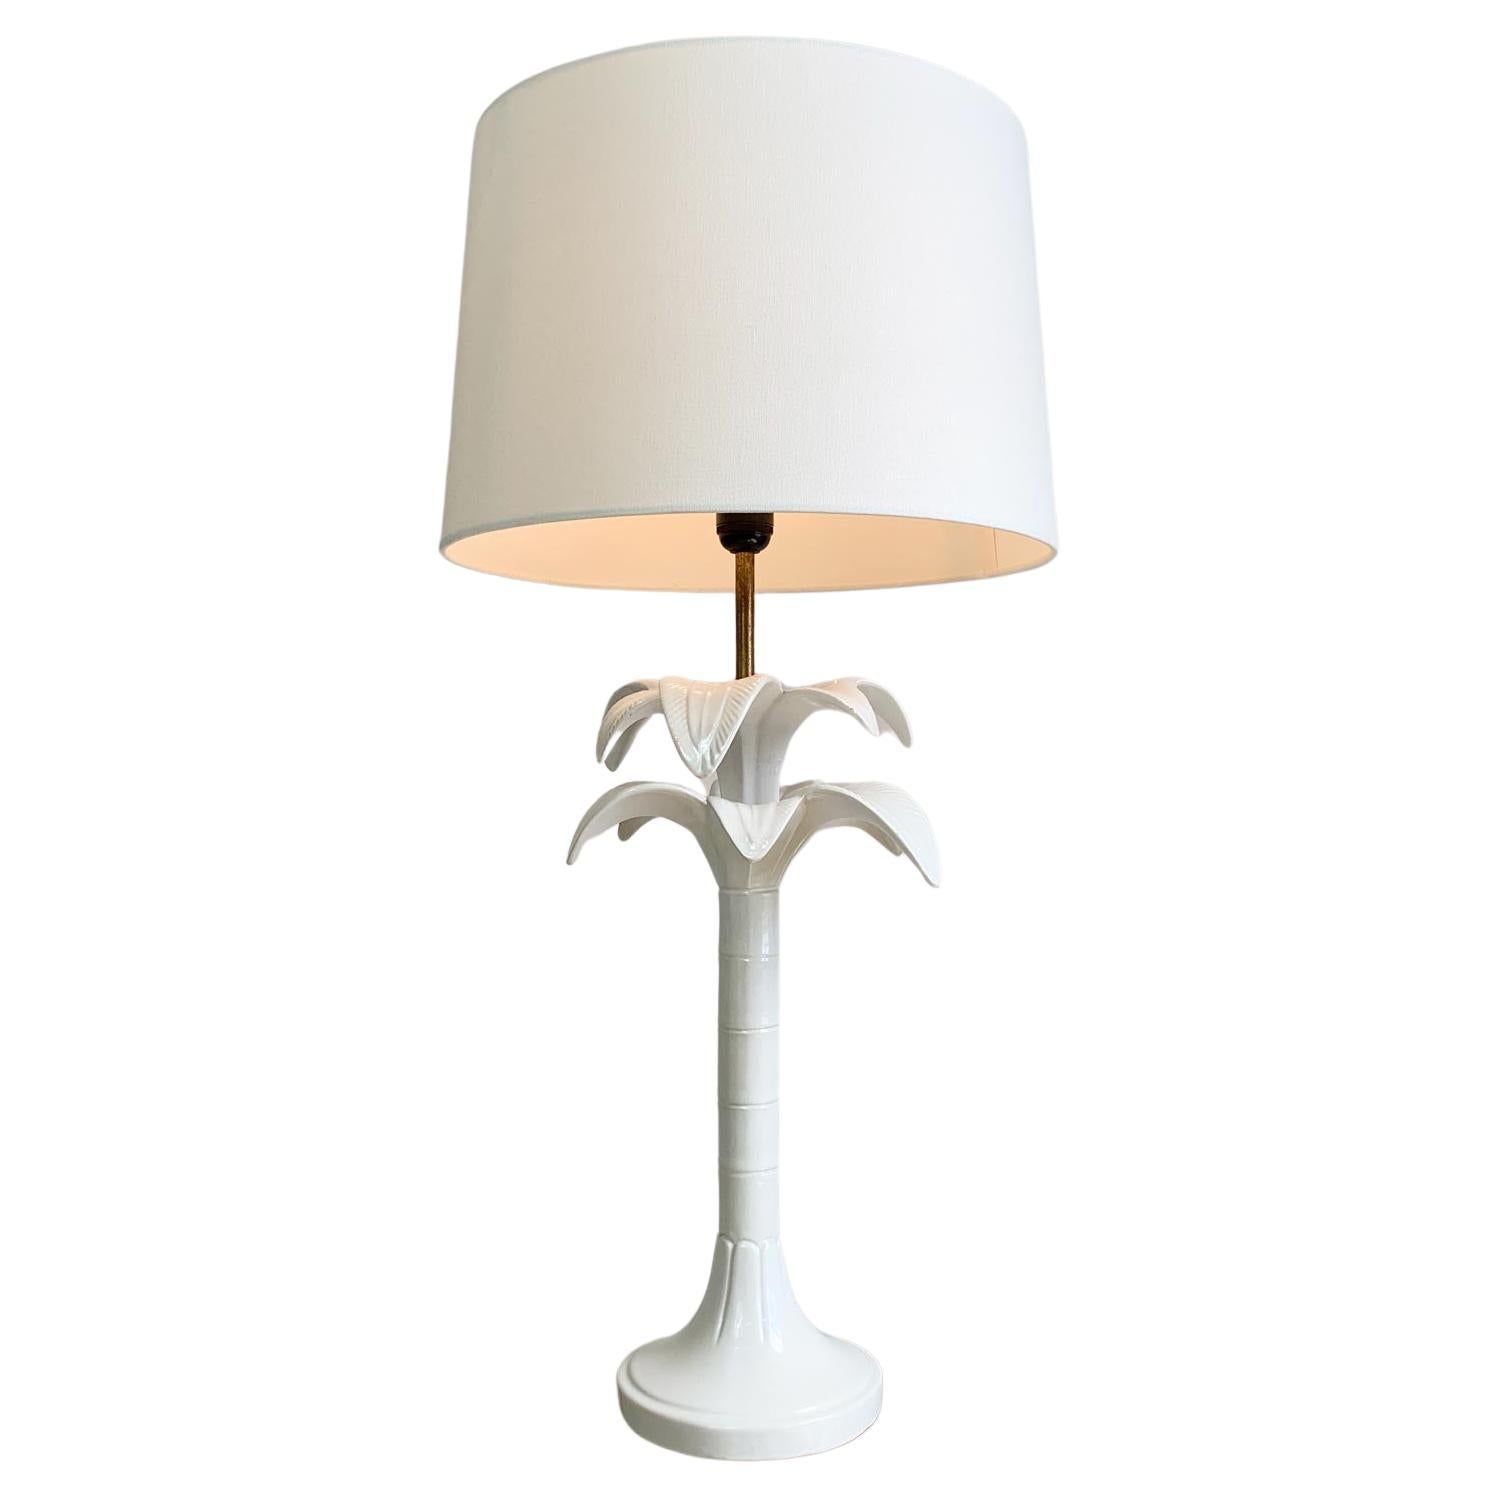 Tommaso Barbi White Palm Tree Table Lamp, signed